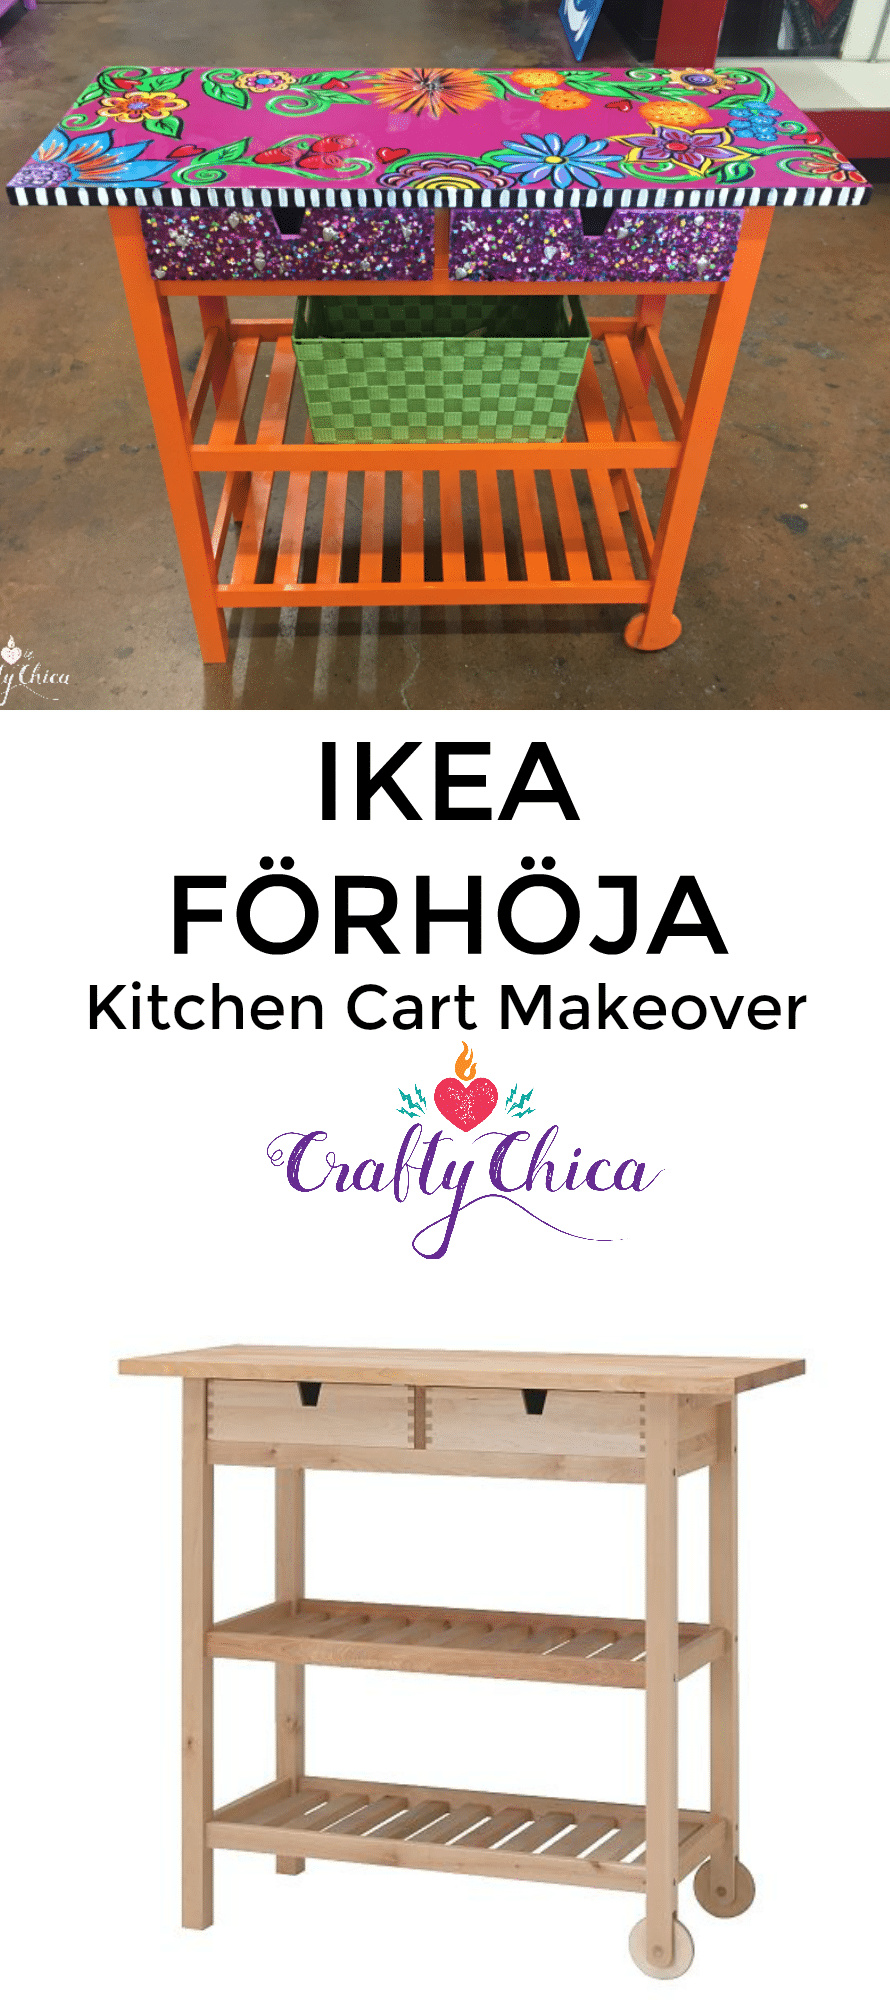 Ikea kitchen cart makeover